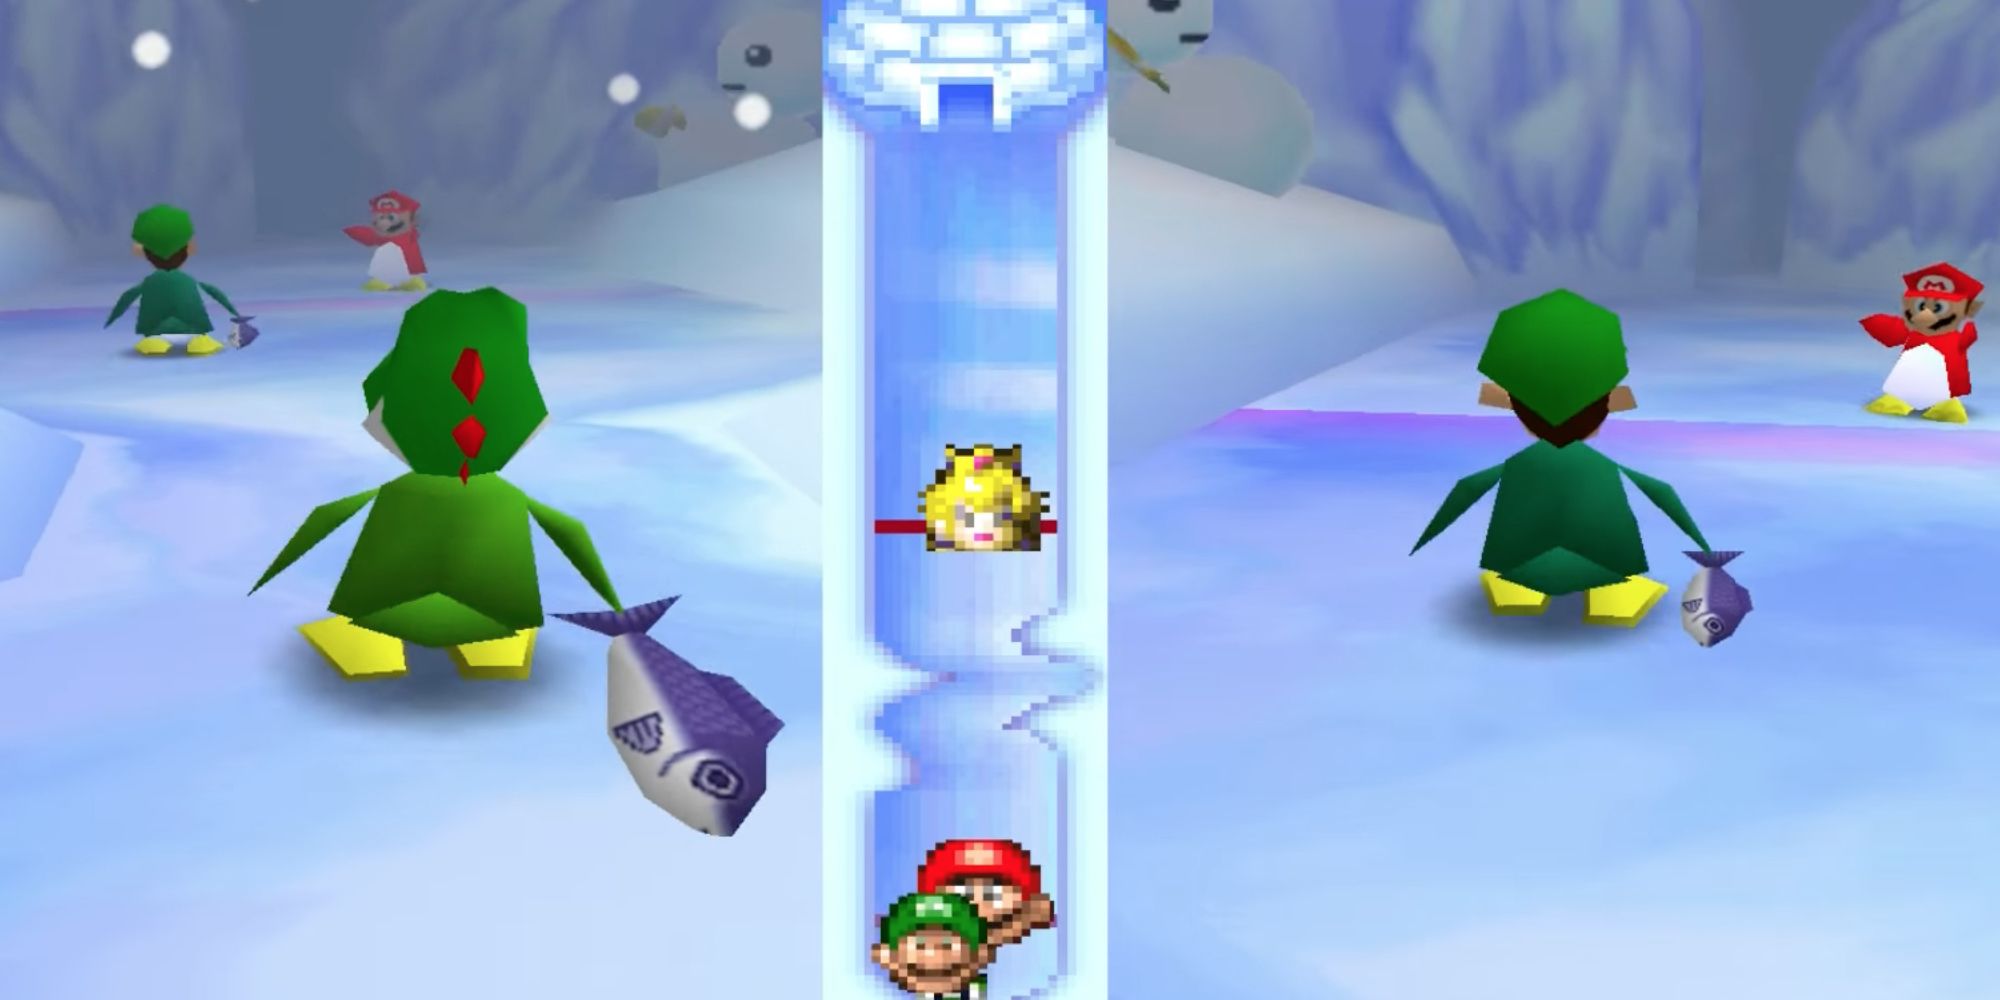 Filet Relay from Mario Party 2 Featuring Yoshi, Luigi, and Mario